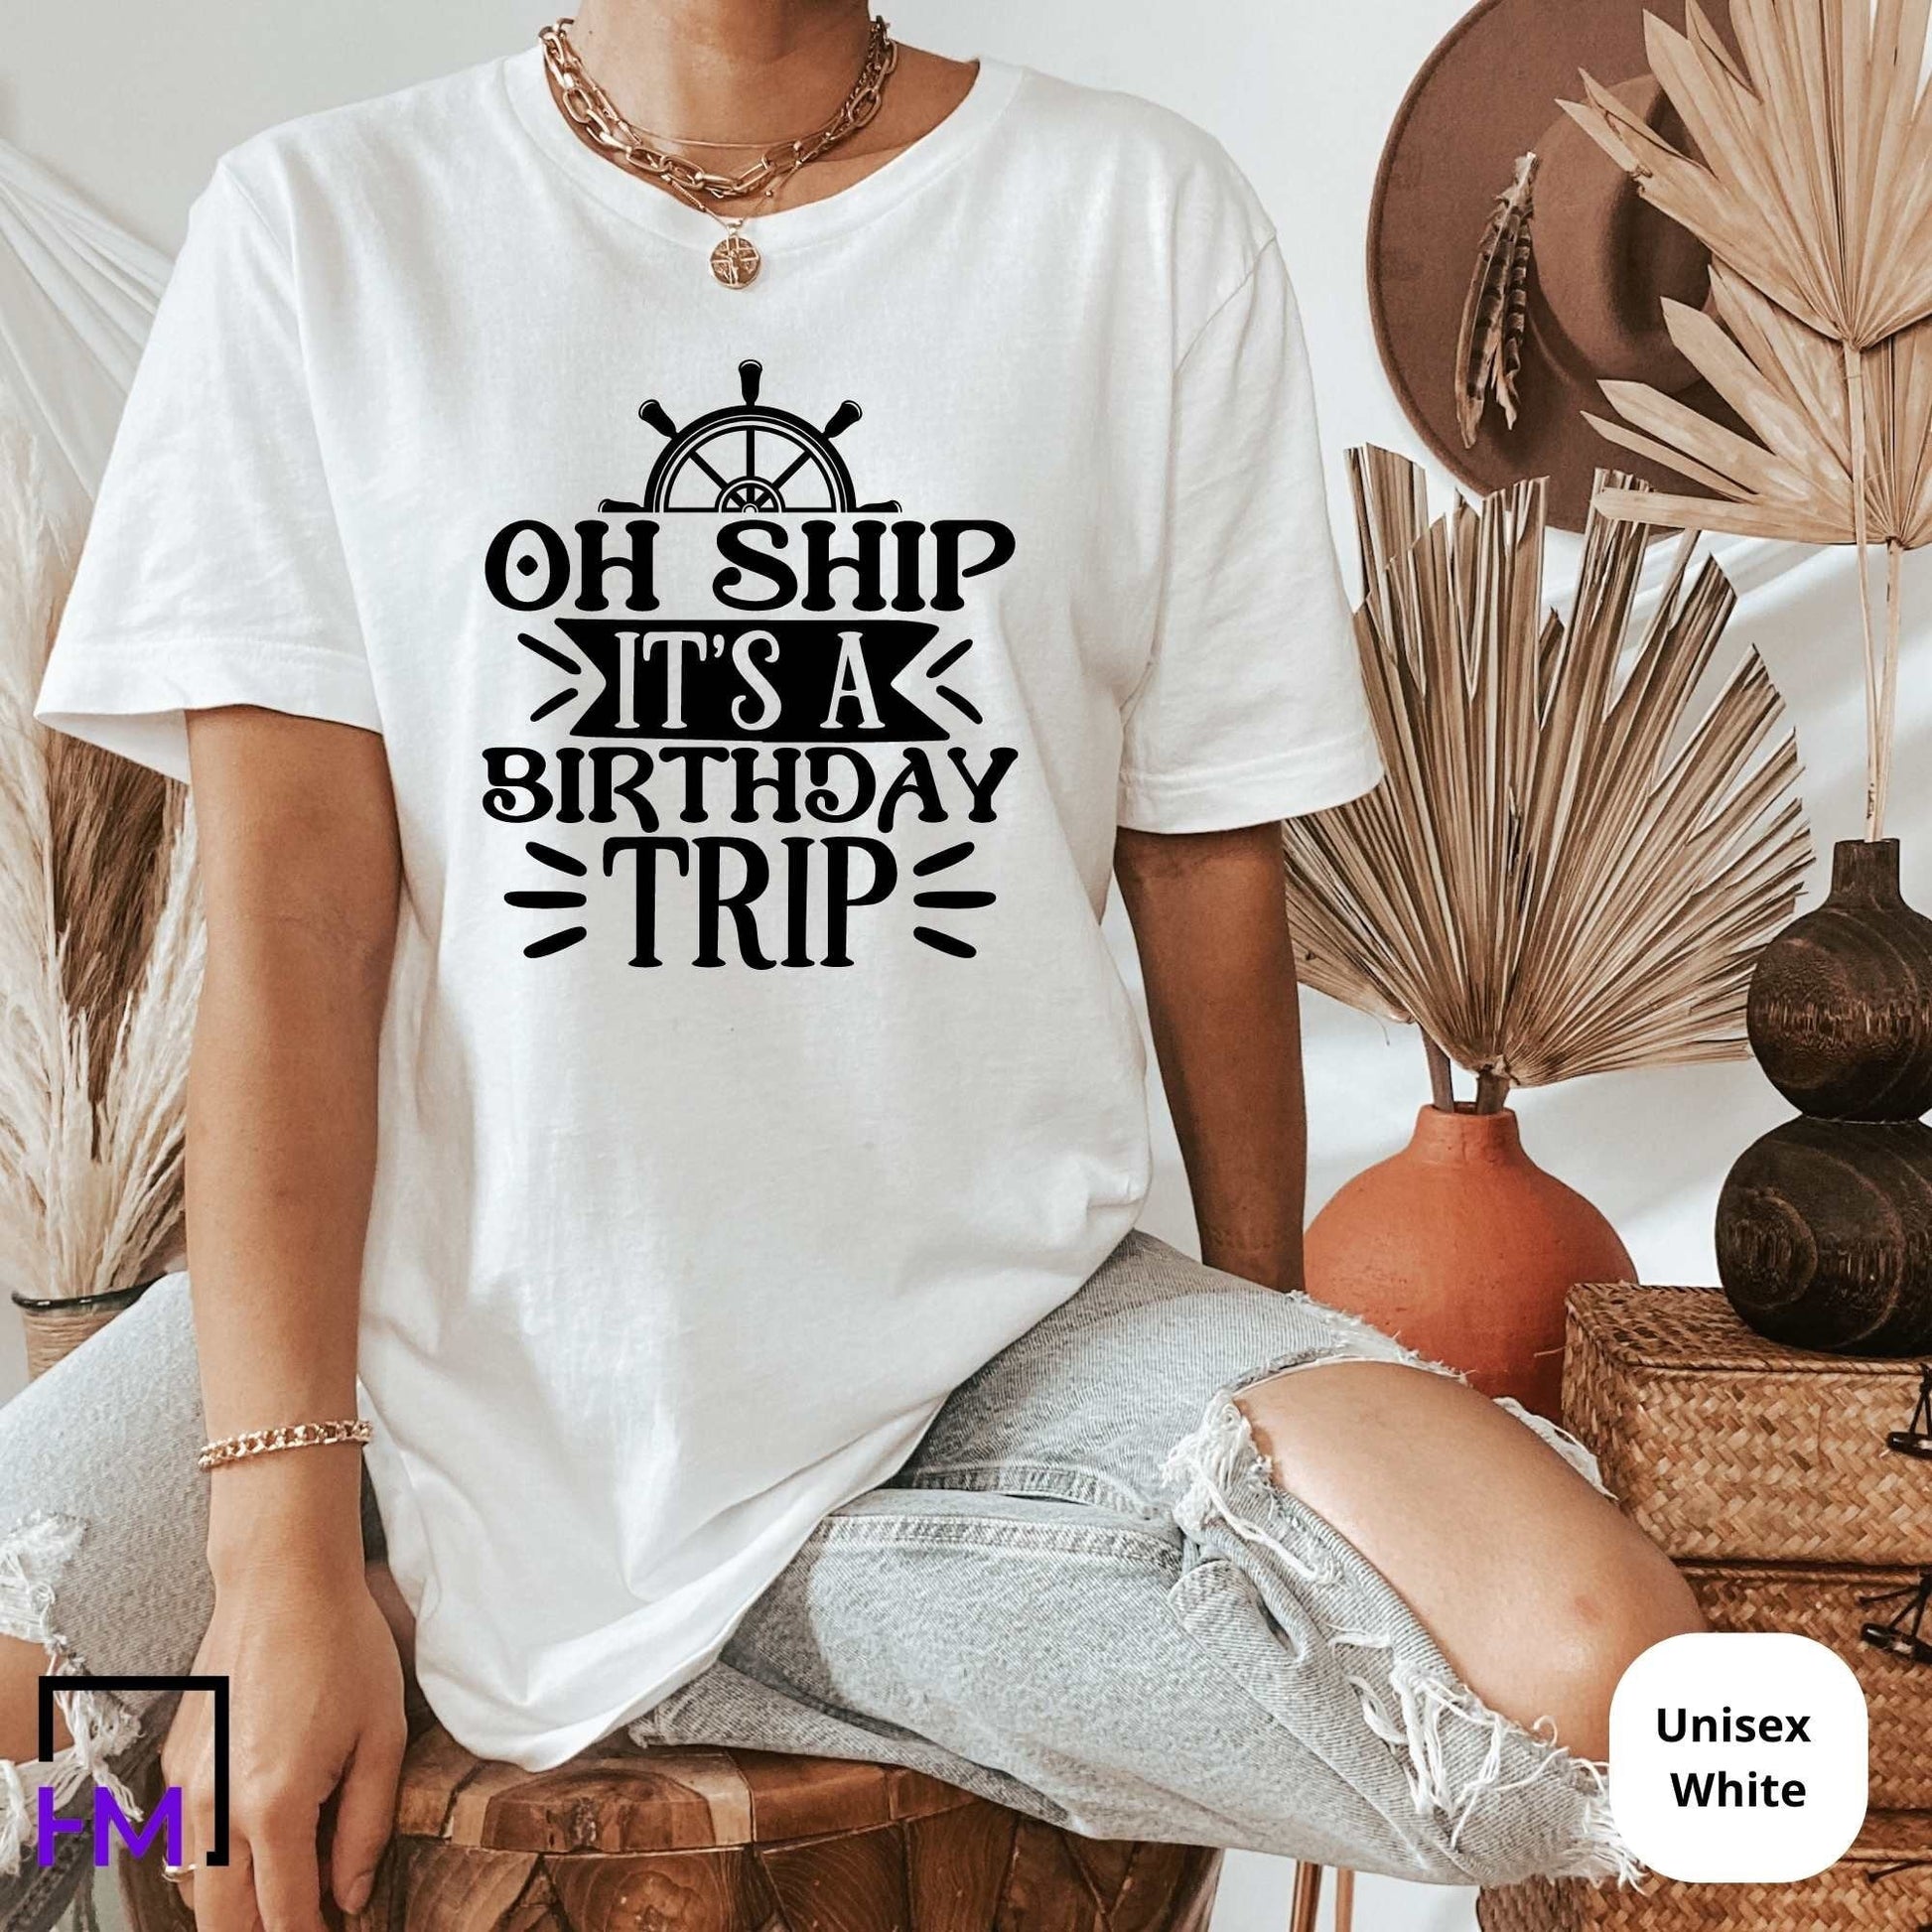 Oh Ship It's a Birthday Trip, Birthday Cruise Shirts for Girls Trip HMDesignStudioUS